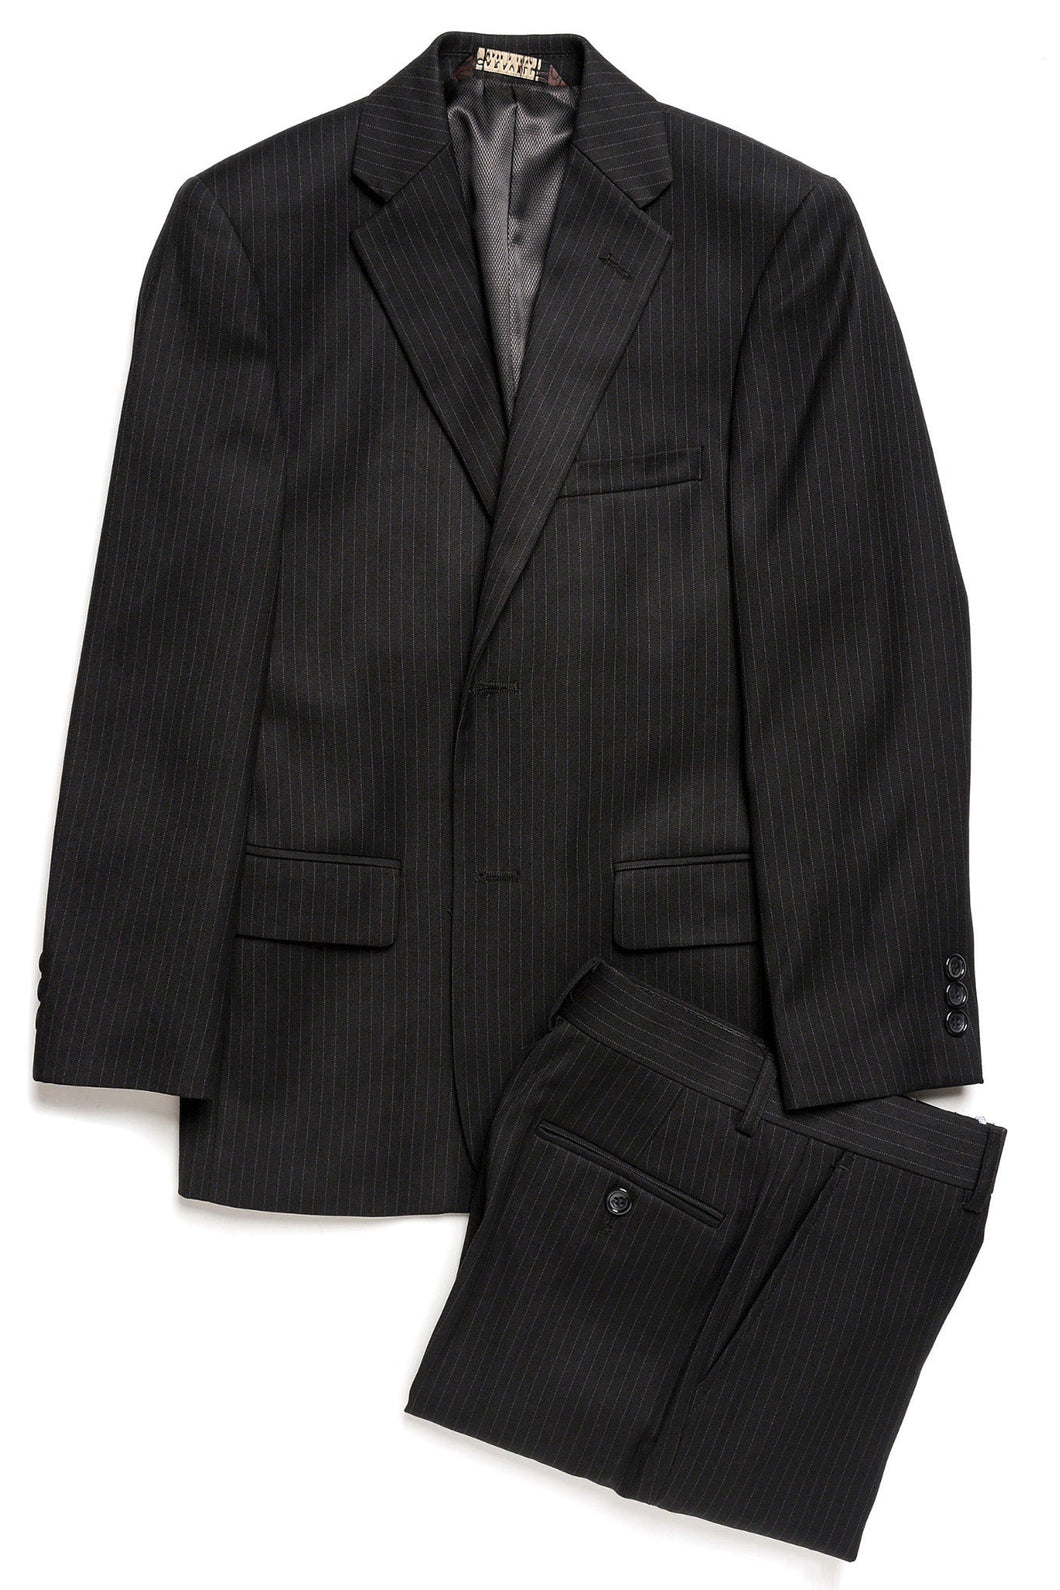 Caravelli Caravelli Black Tonal Stripe Suit